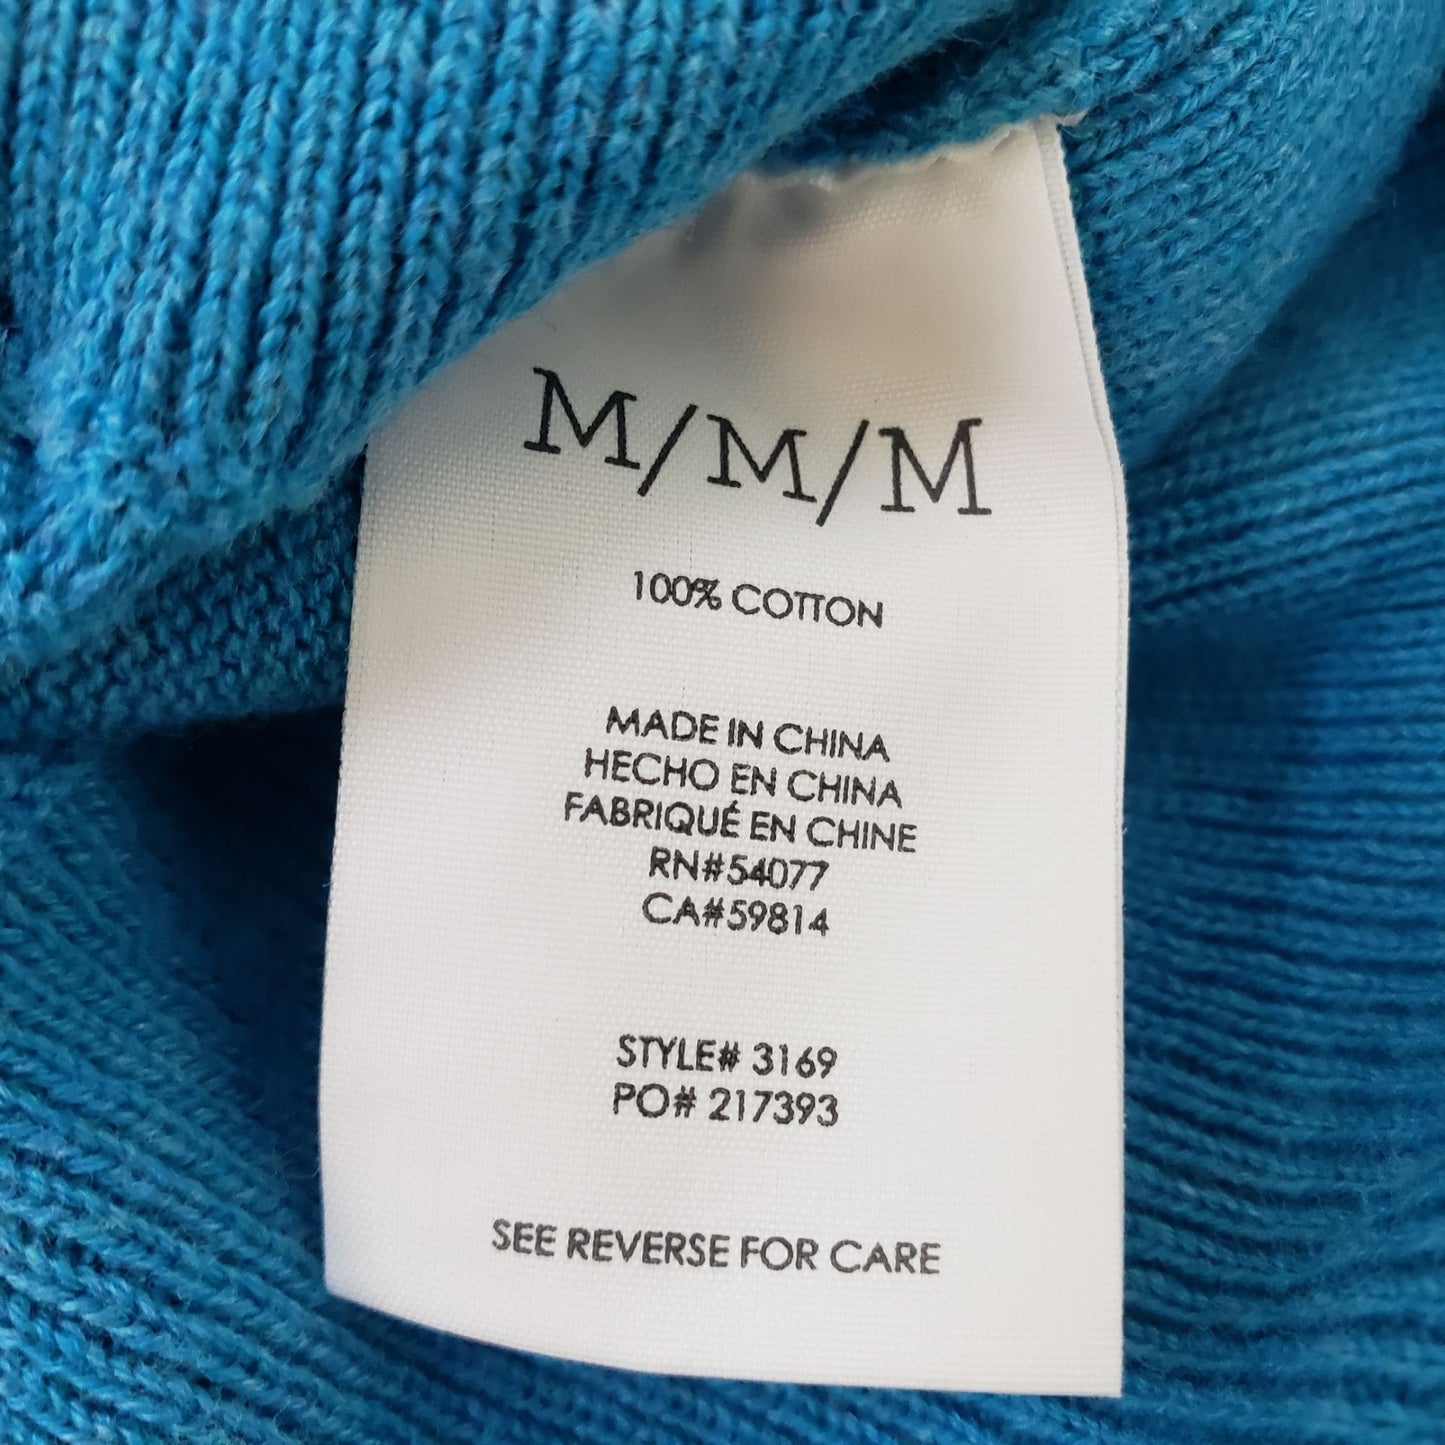 Cabi Blue Darby Ribbed Knit Cardigan Sweater Size Medium